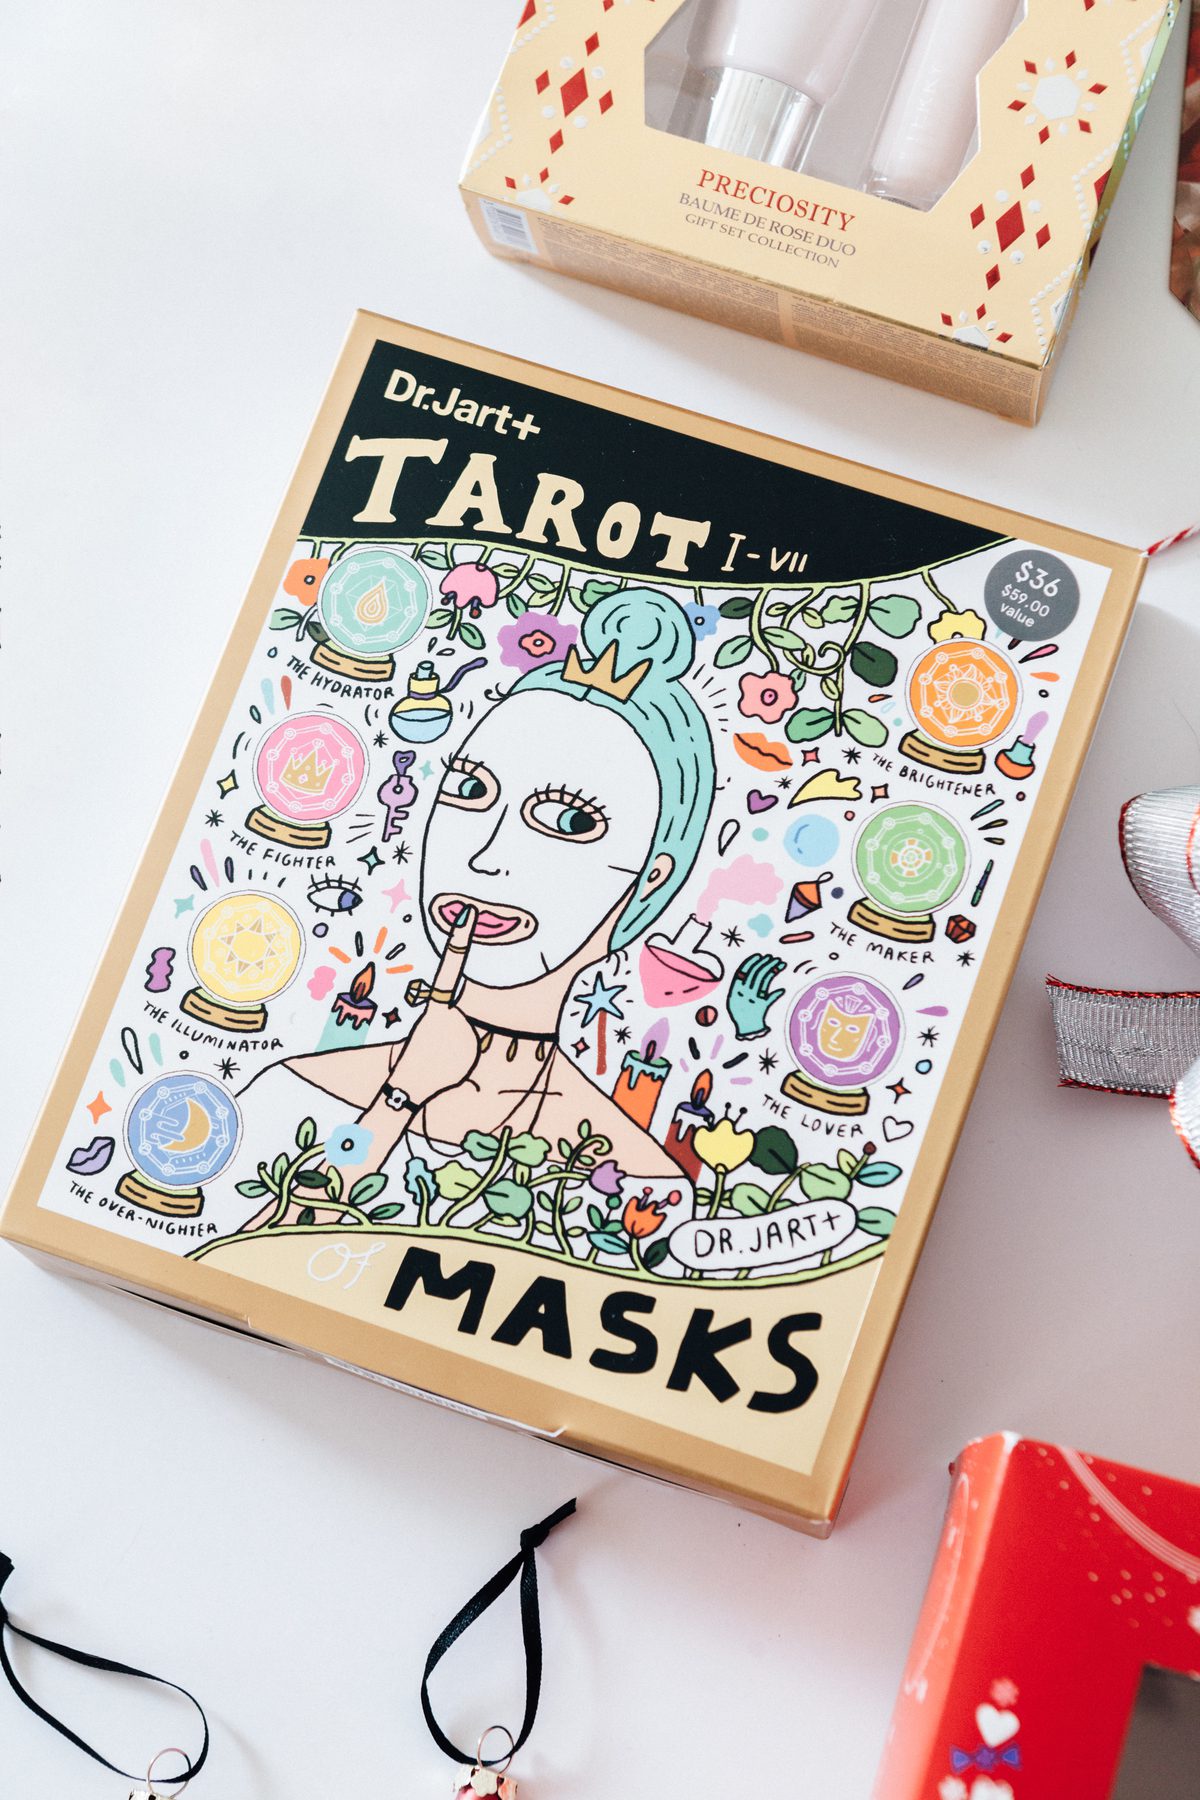 Dr. Jart Tarot Masks for as holiday beauty gift sets